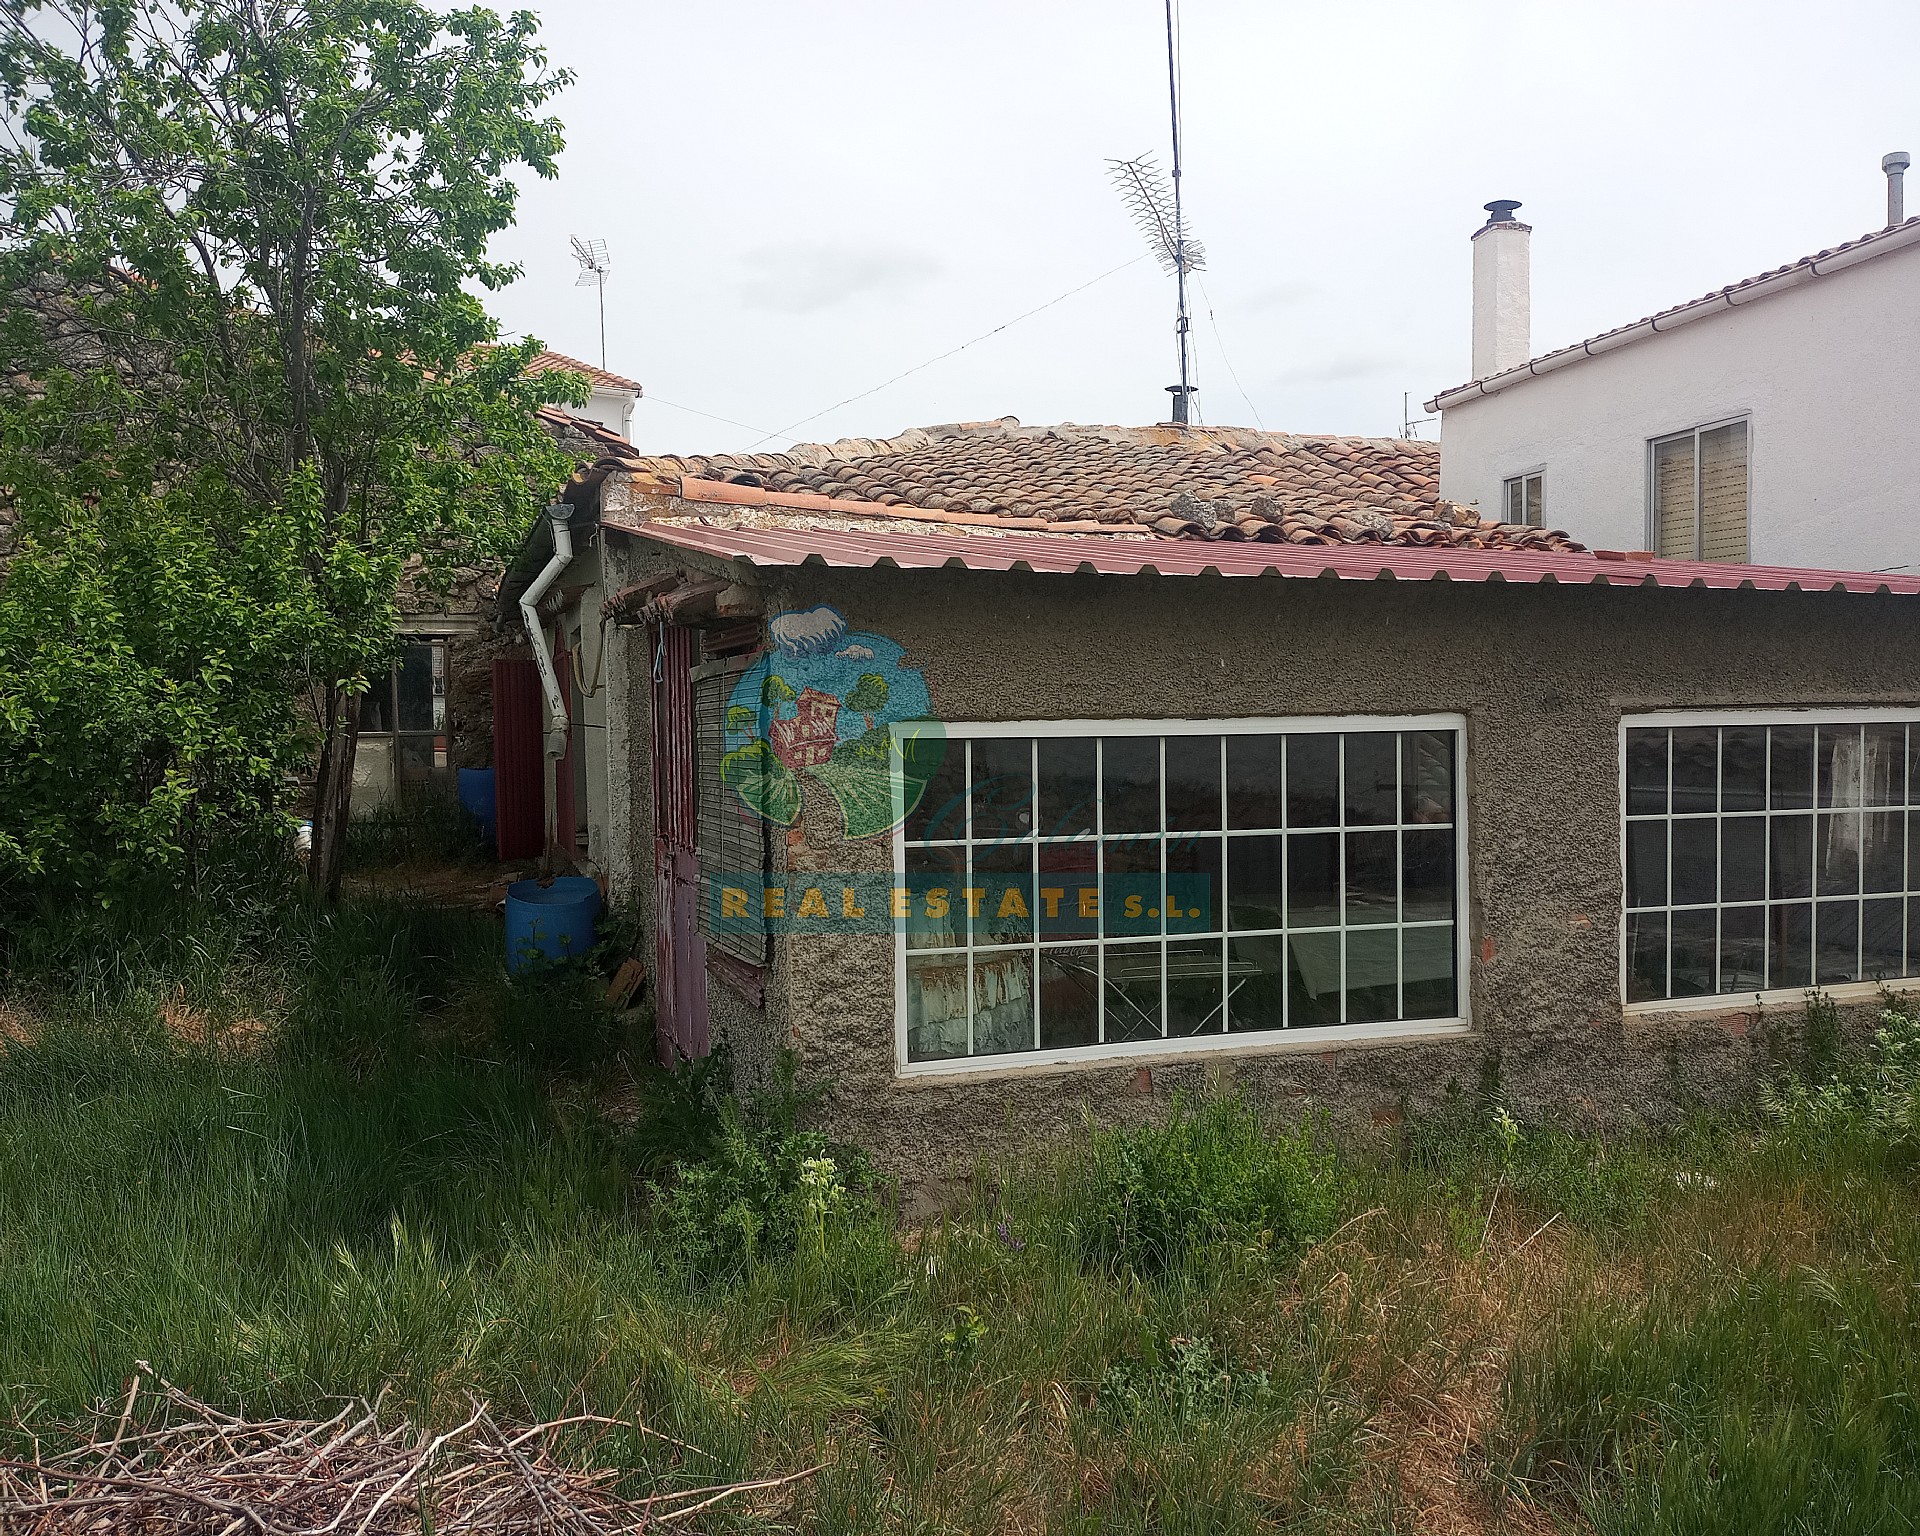 Property for rehabilitation in Sierra de Gredos.